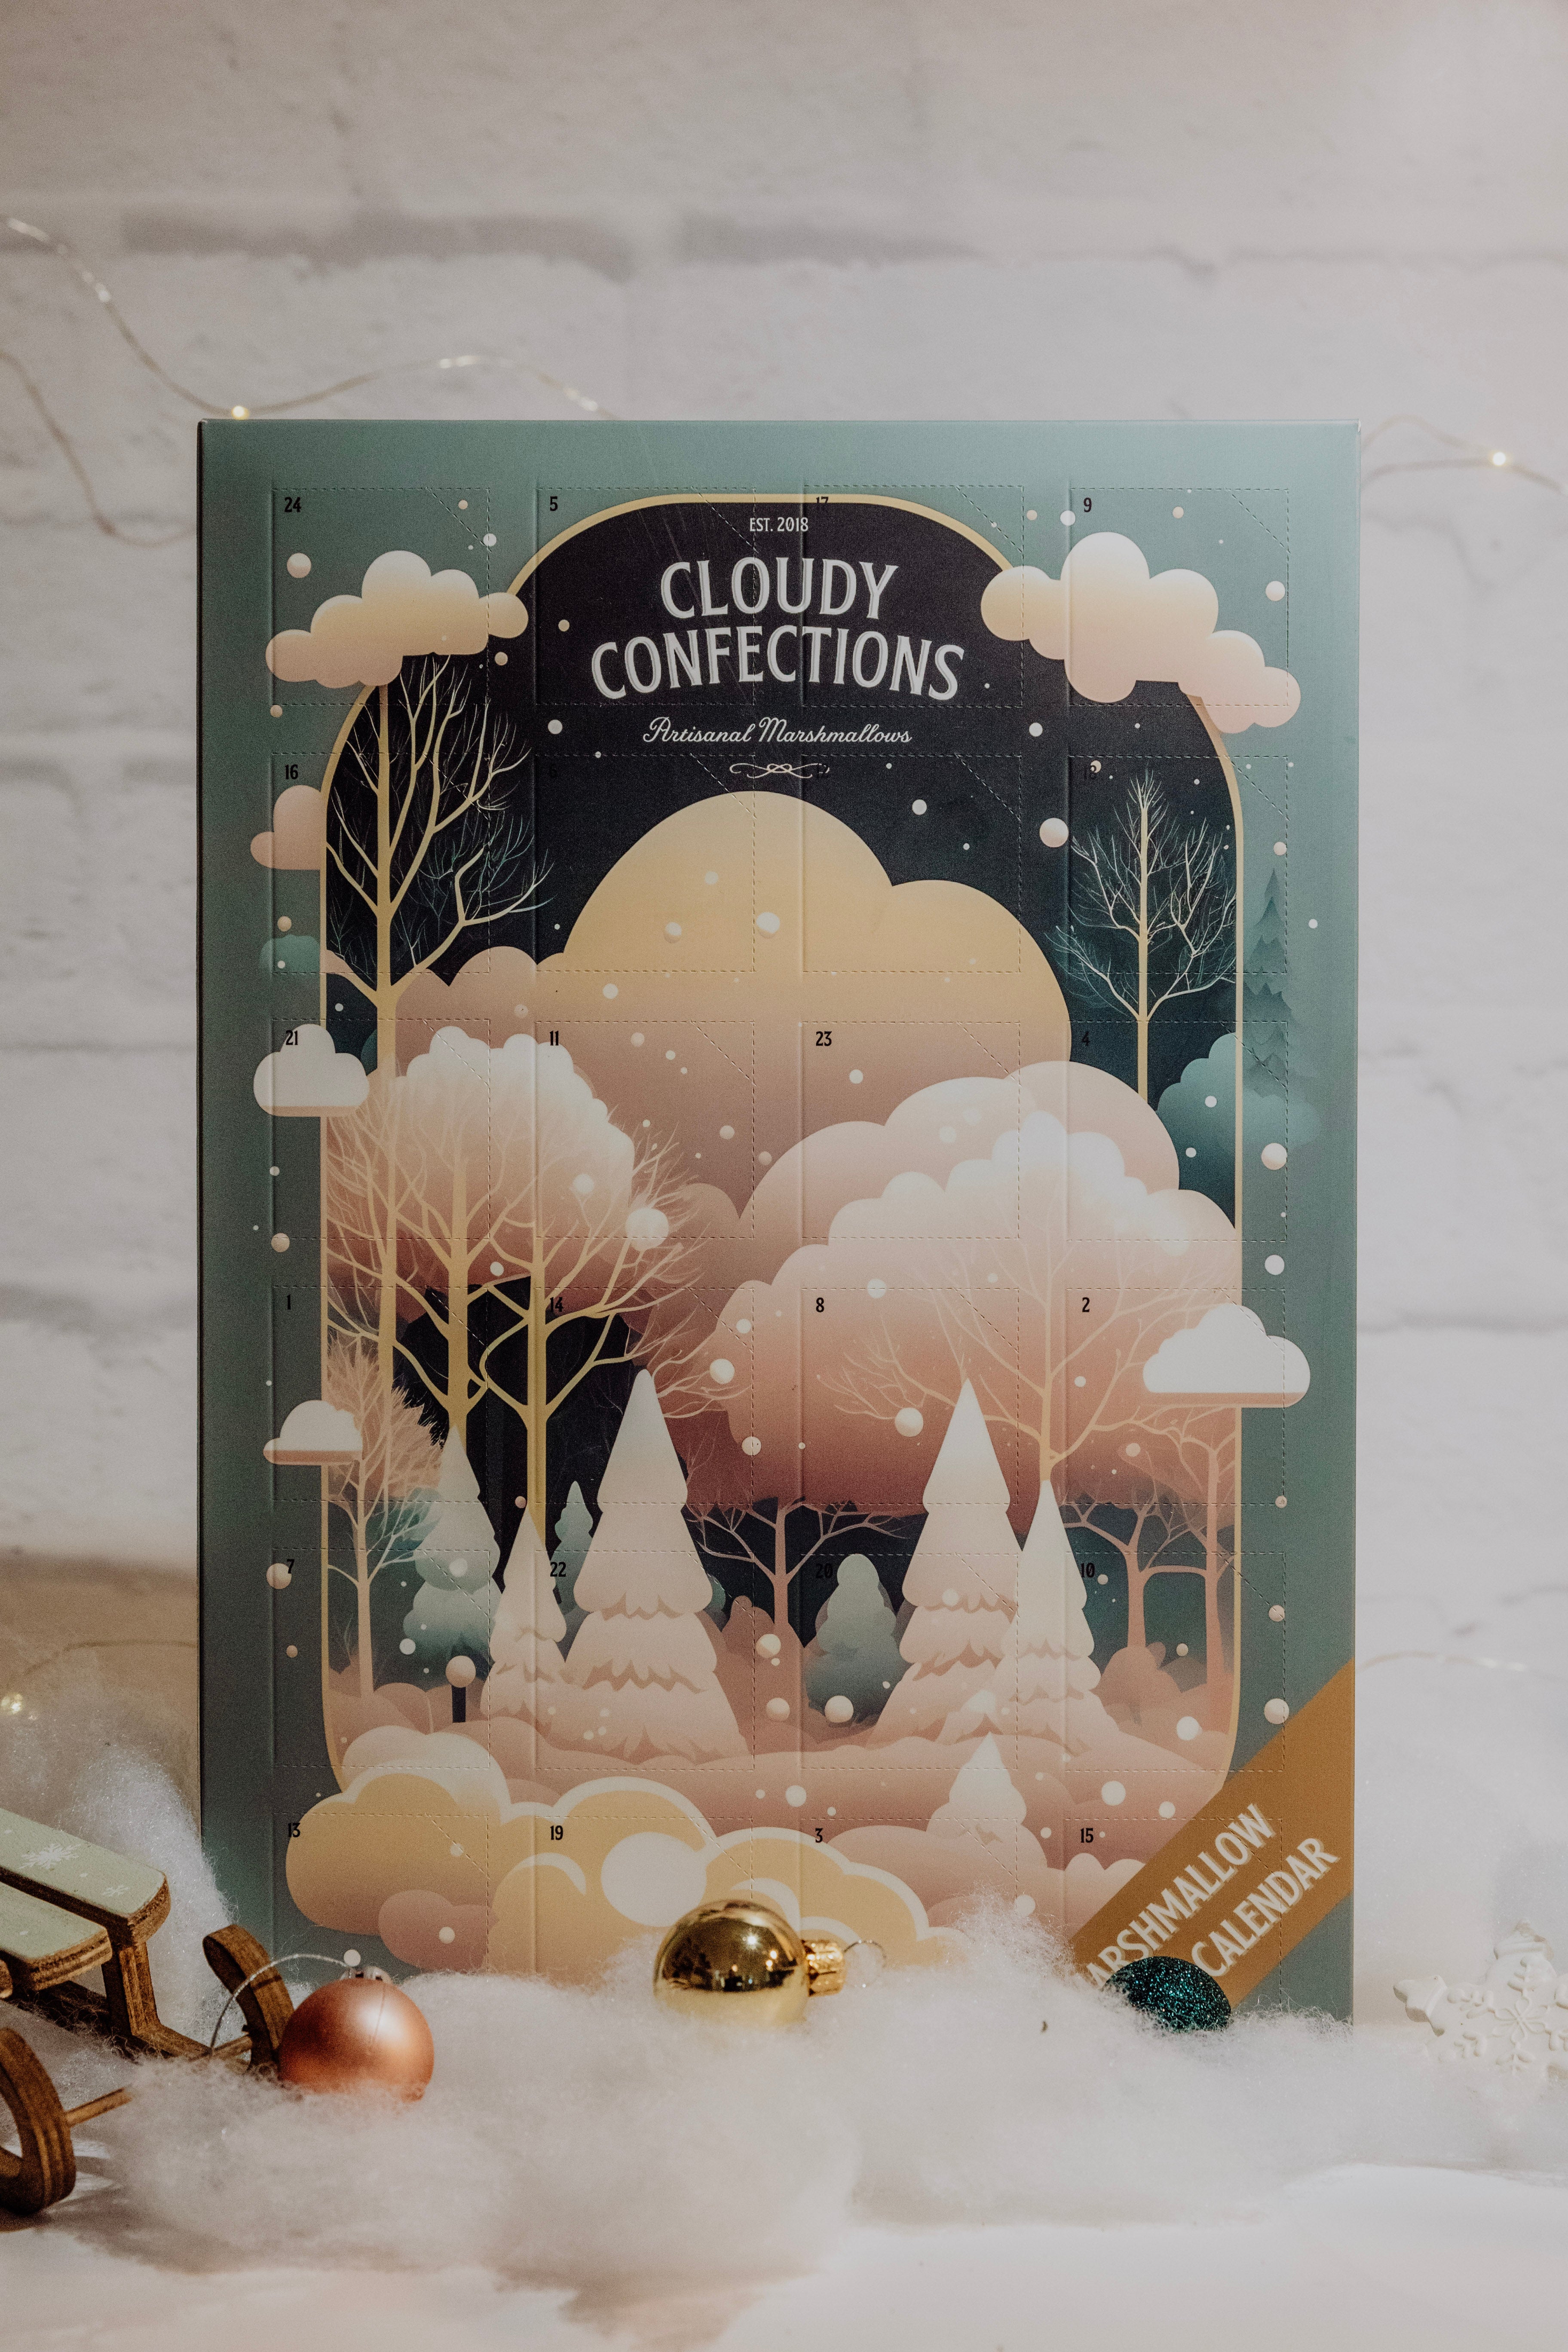 Cloudy Confections Advent Calendar, Artisanal Marshmallows